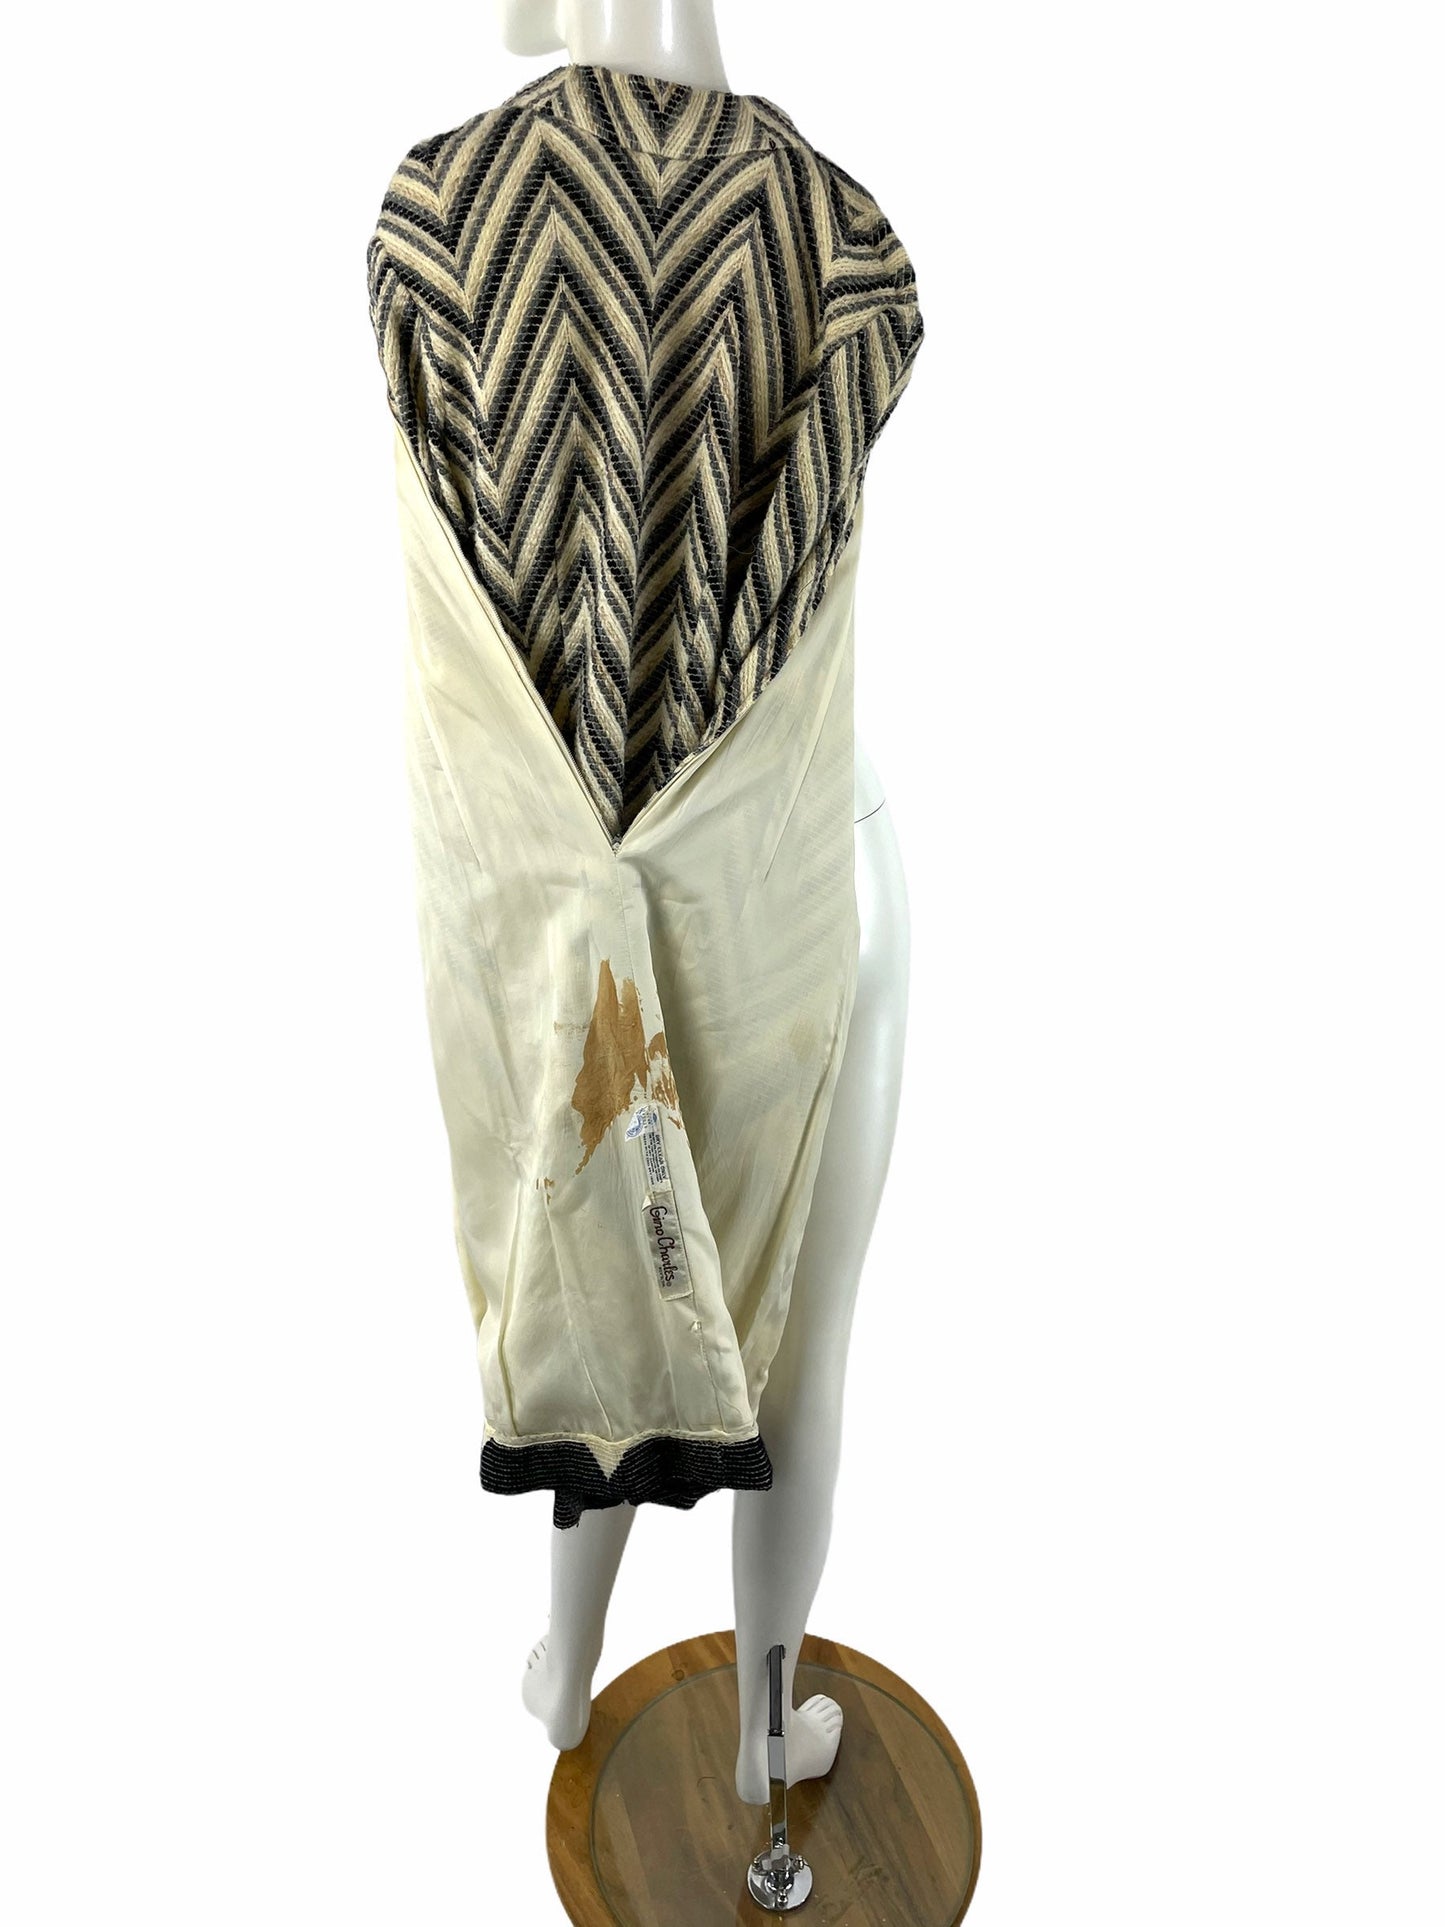 1960s wool knit dress chevron stripes gray cream black by Gino Charles Size M